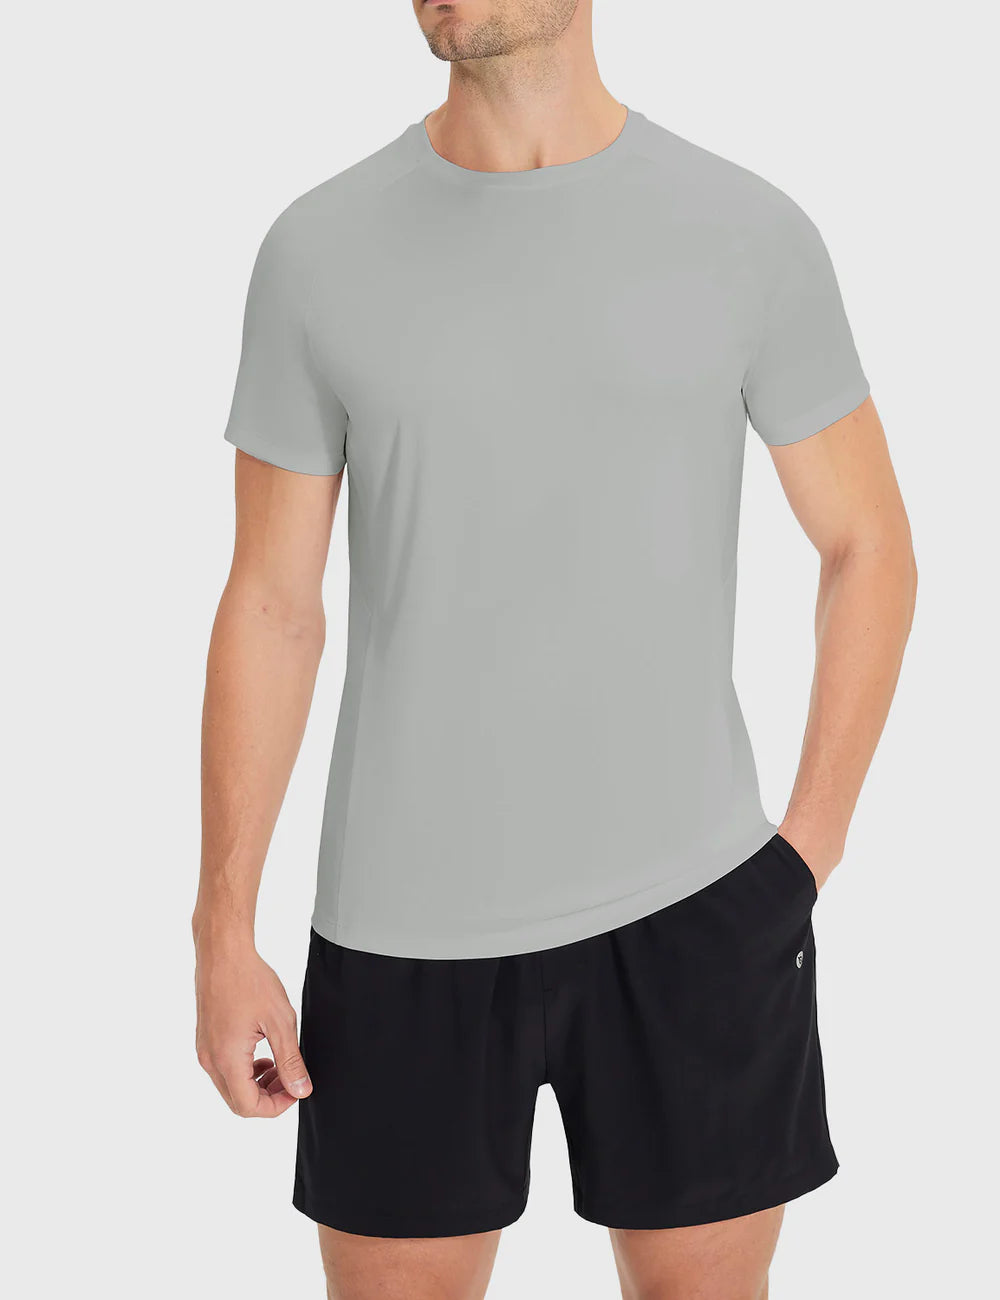 Baleaf Quick Dry UPF 50+ Athletic T-shirts